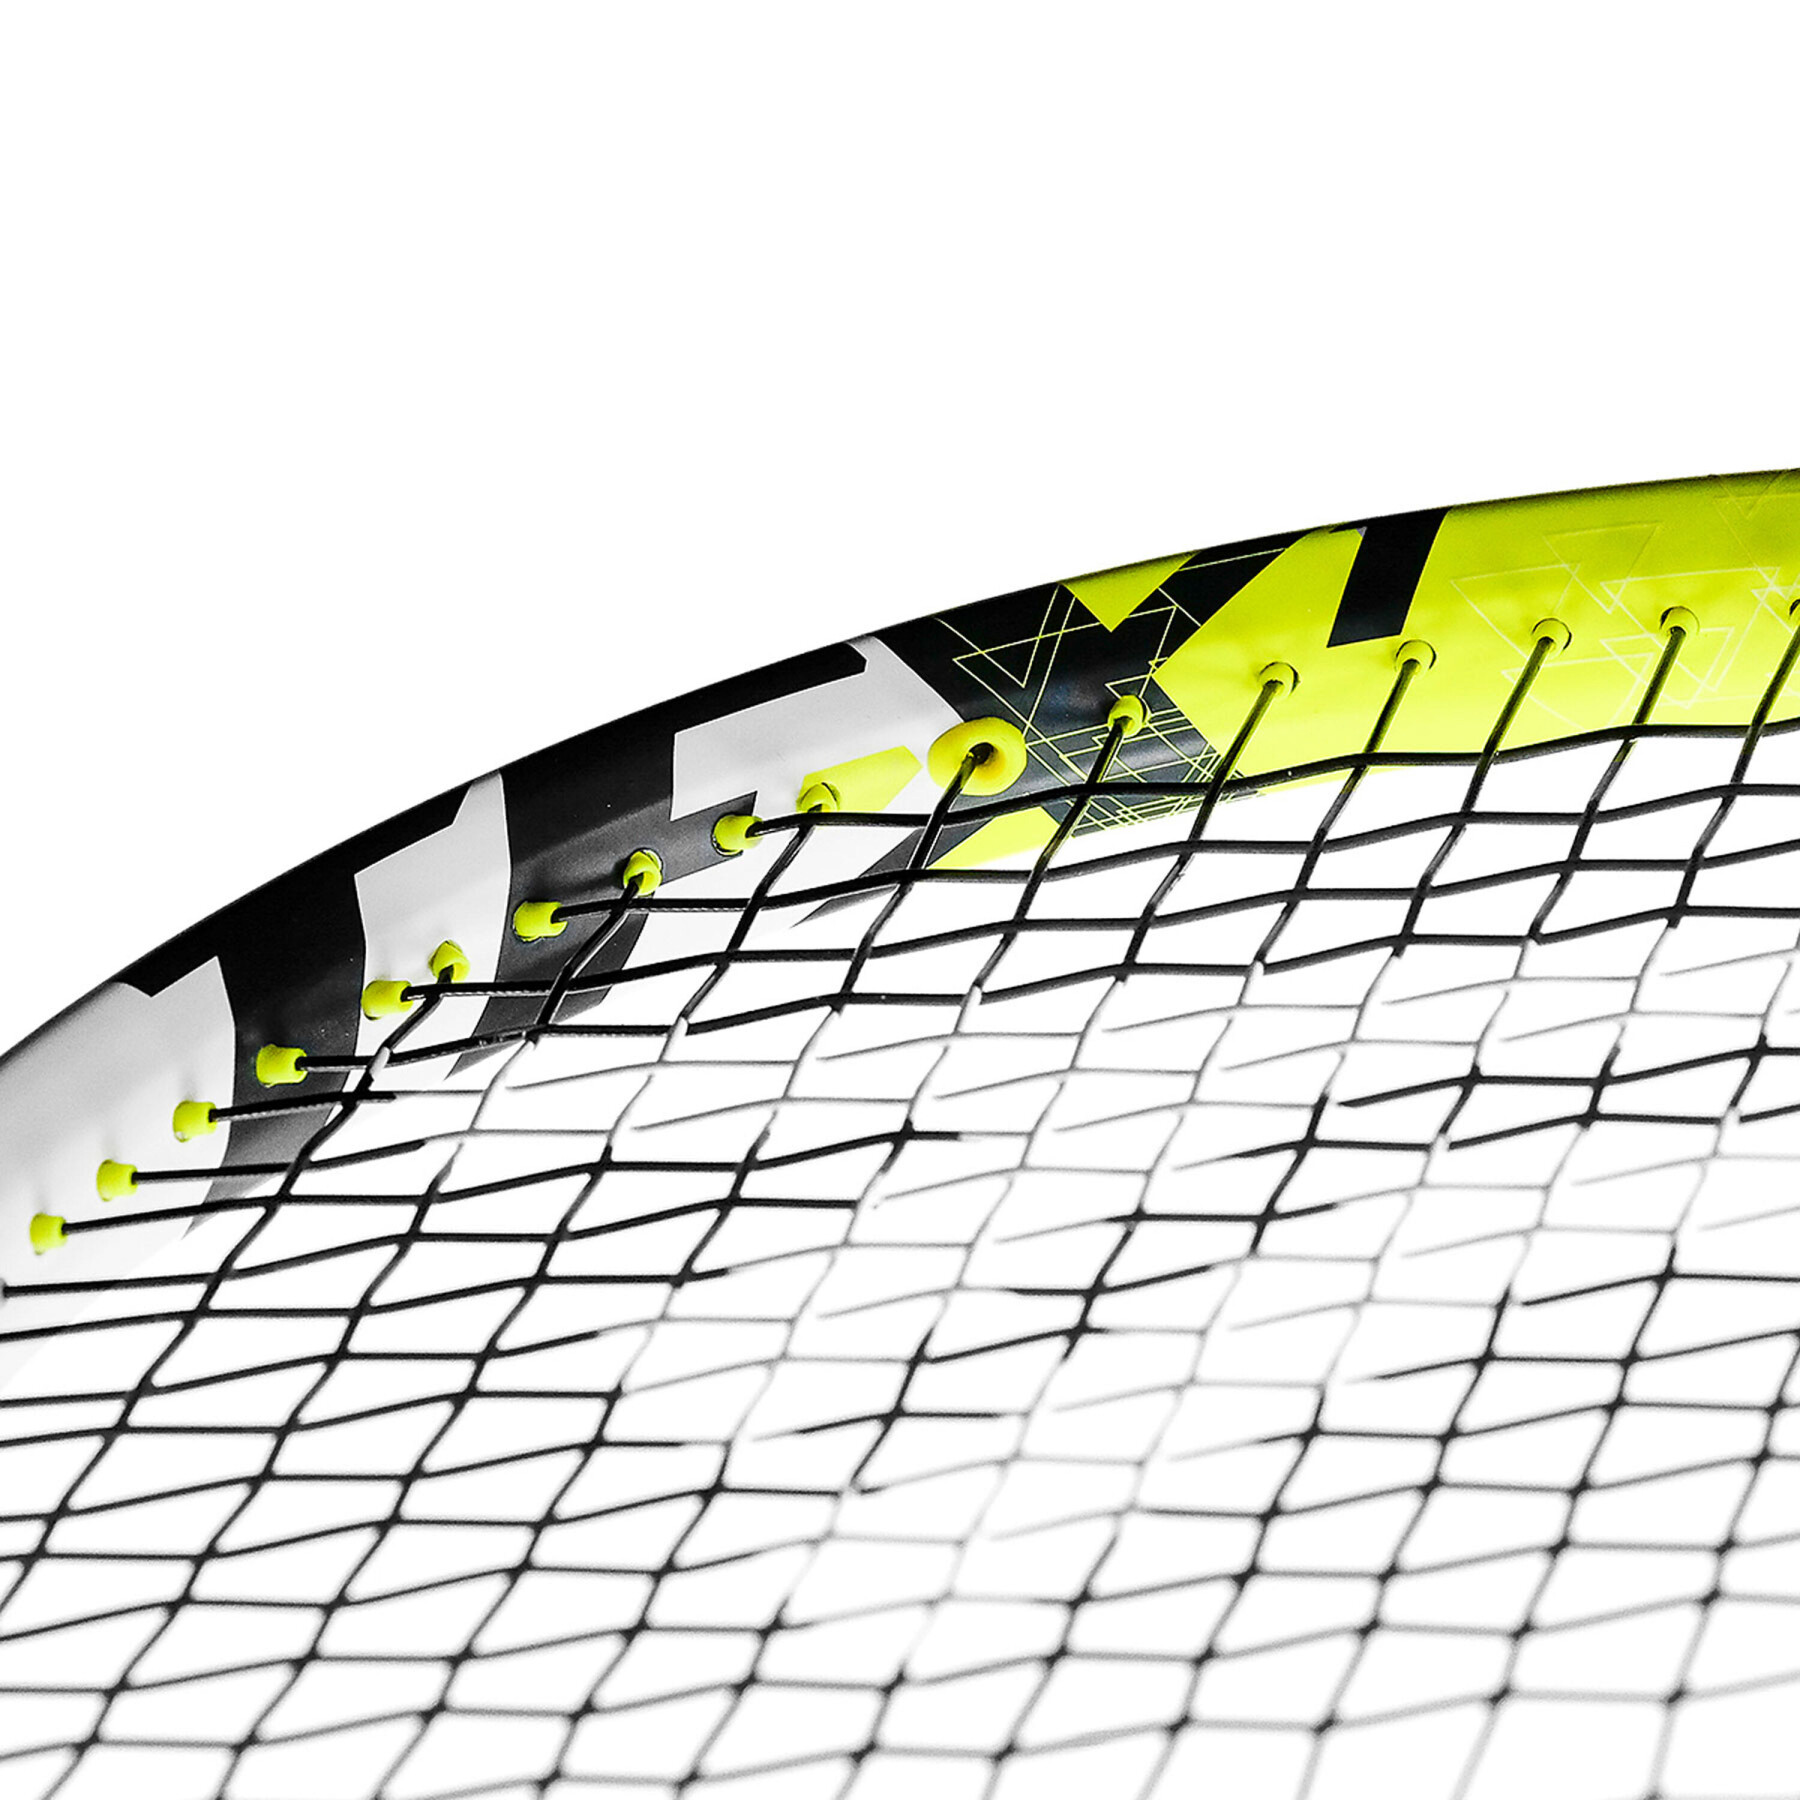 Racchetta da tennis Tecnifibre TF-X1 V2 305